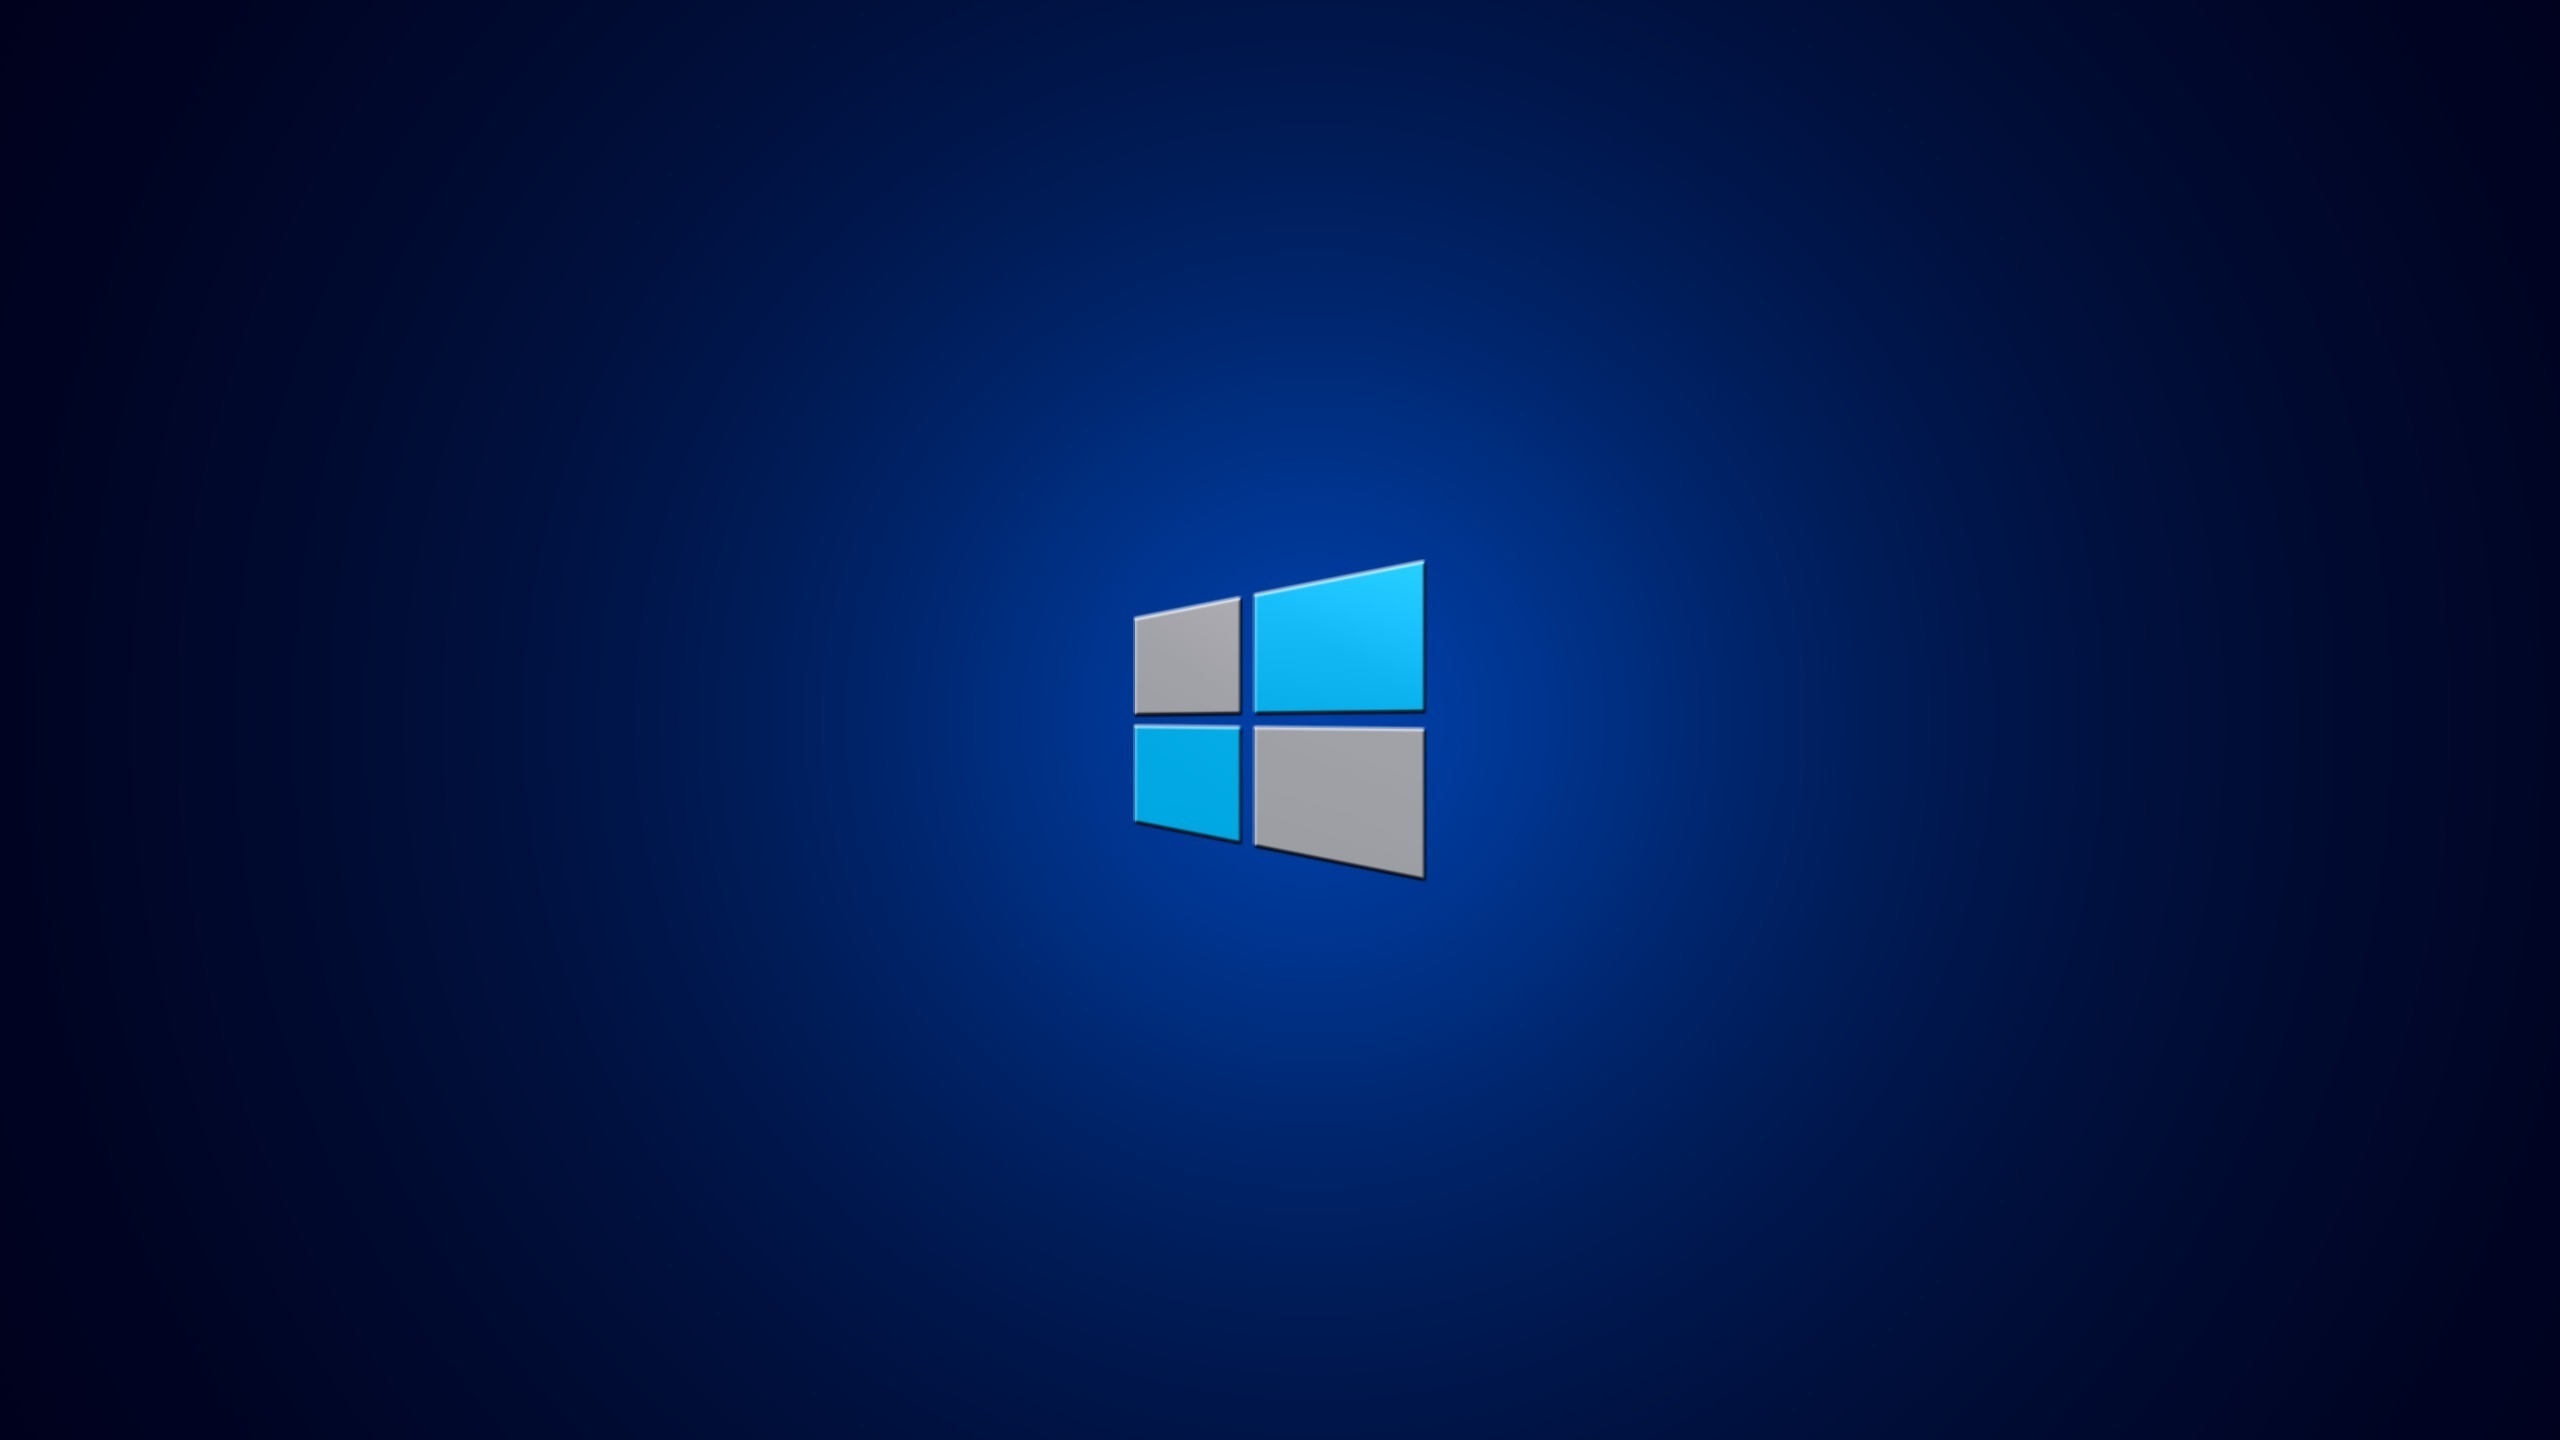 Windows 8 Background for 2560x1440 HDTV resolution